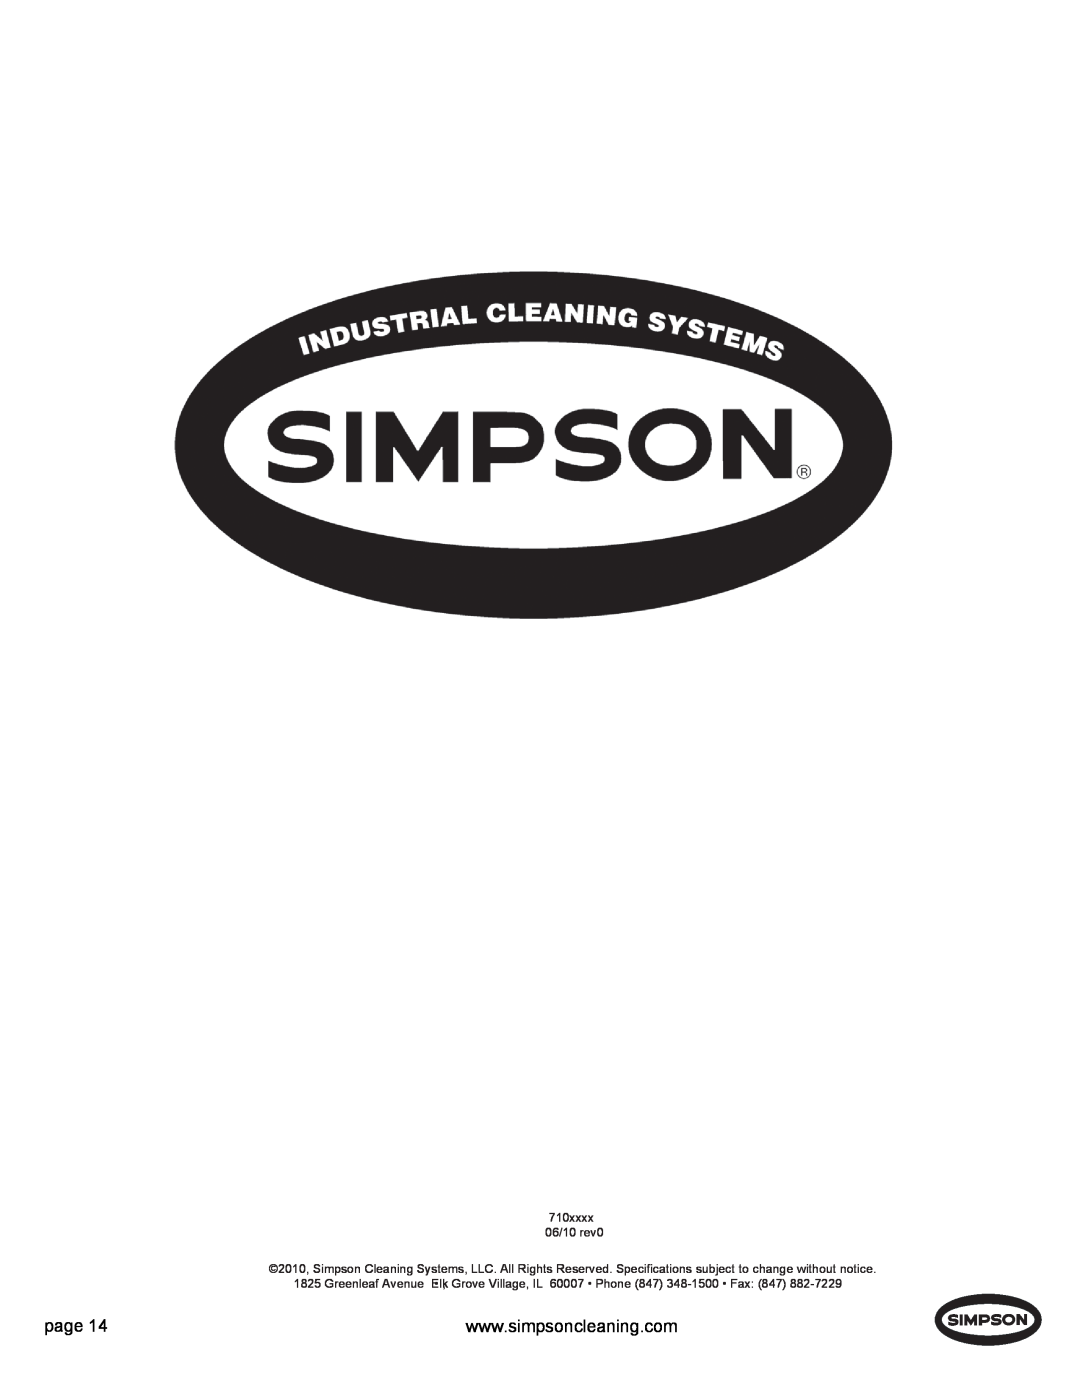 Simpson PS3000 manual 710xxxx 06/10 rev0 